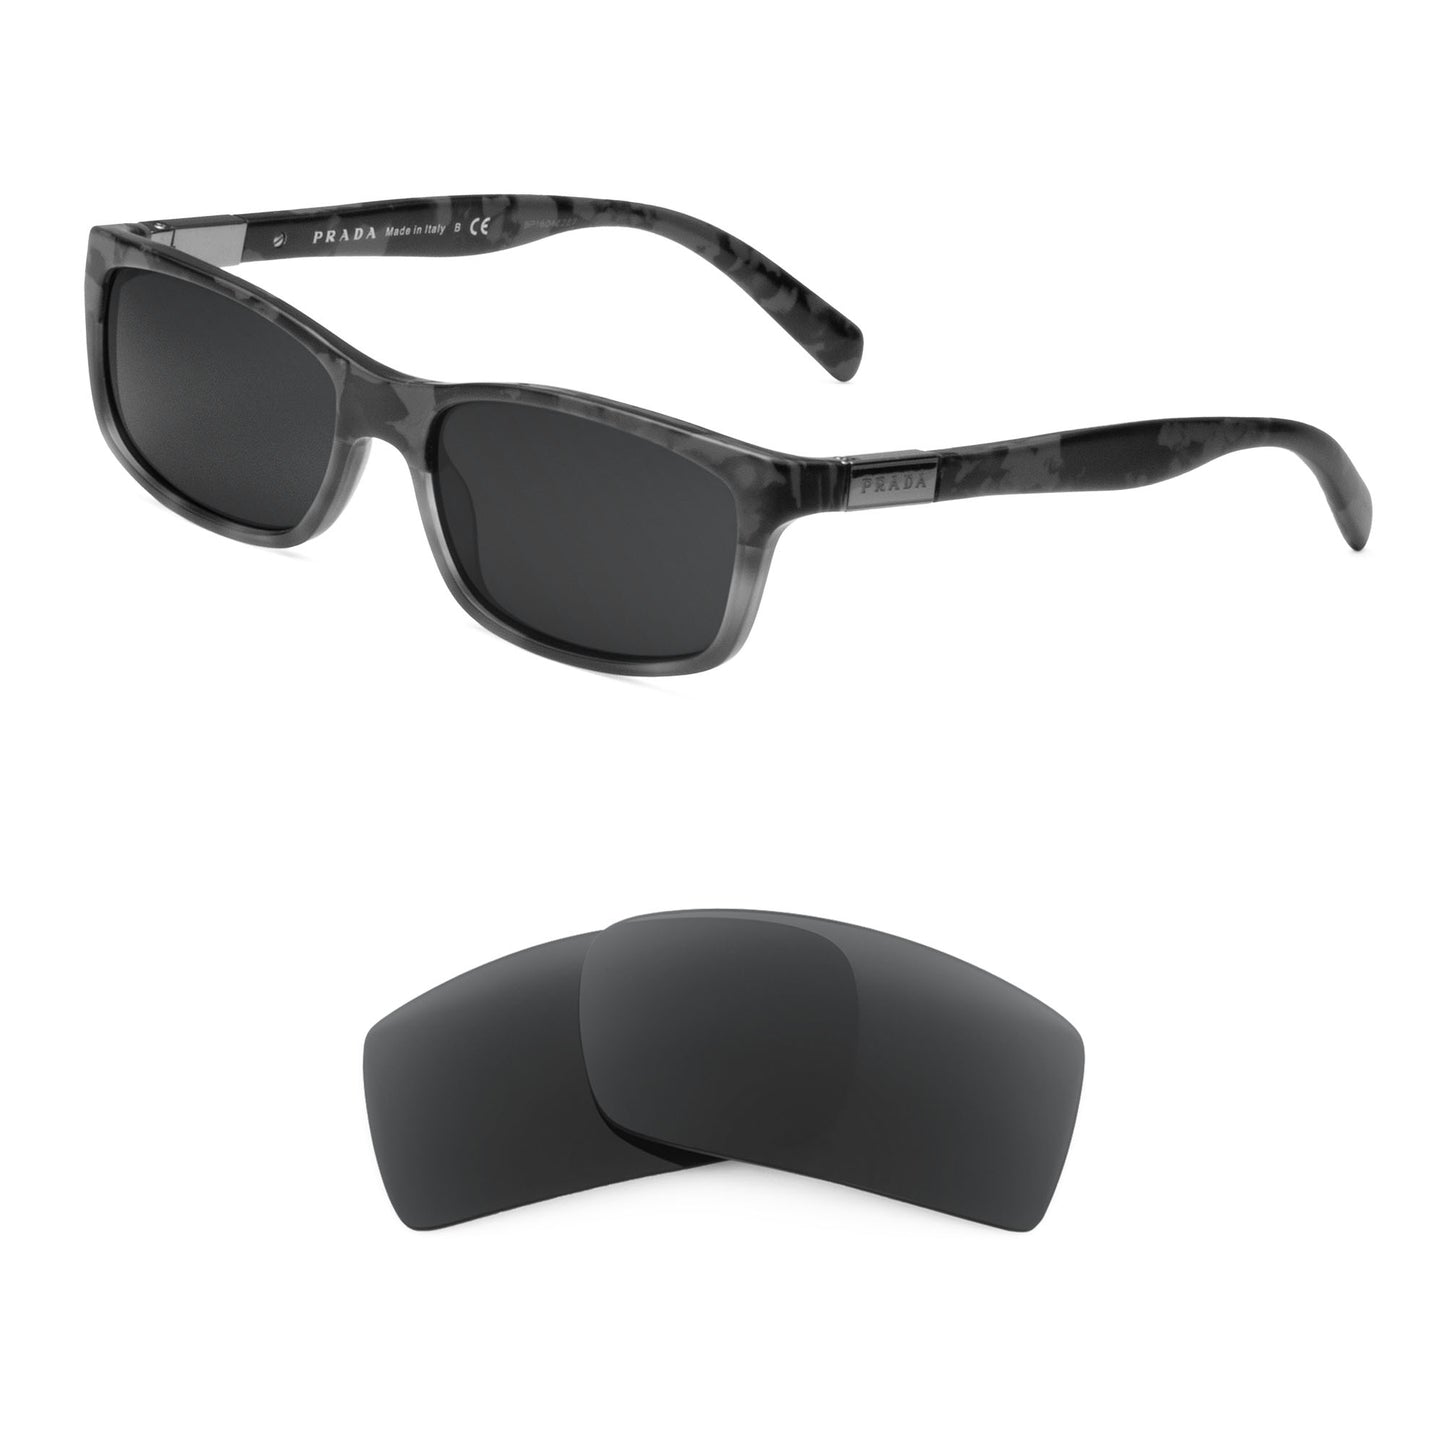 Prada VPR 02O sunglasses with replacement lenses